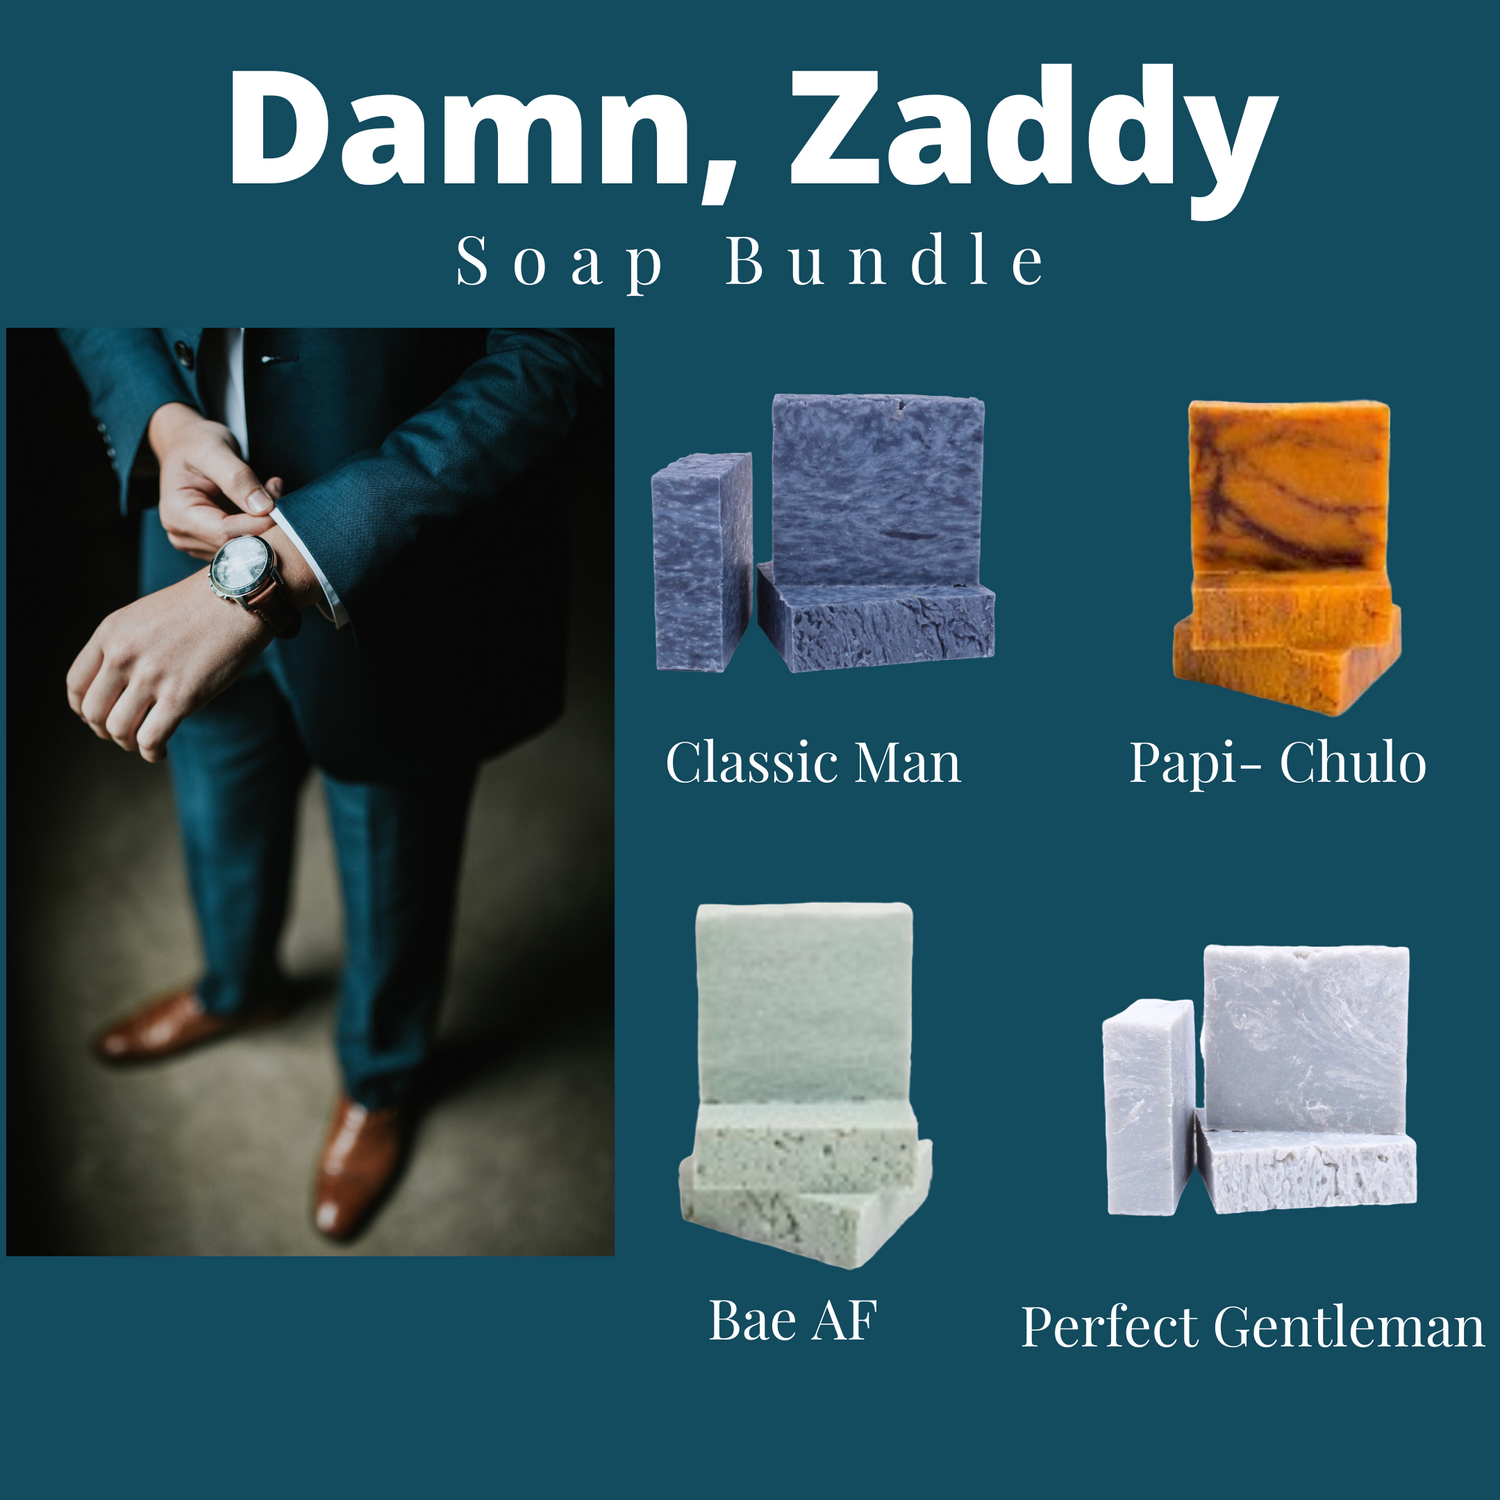 Damn Zaddy Soap Bundle - The Skin Brewery